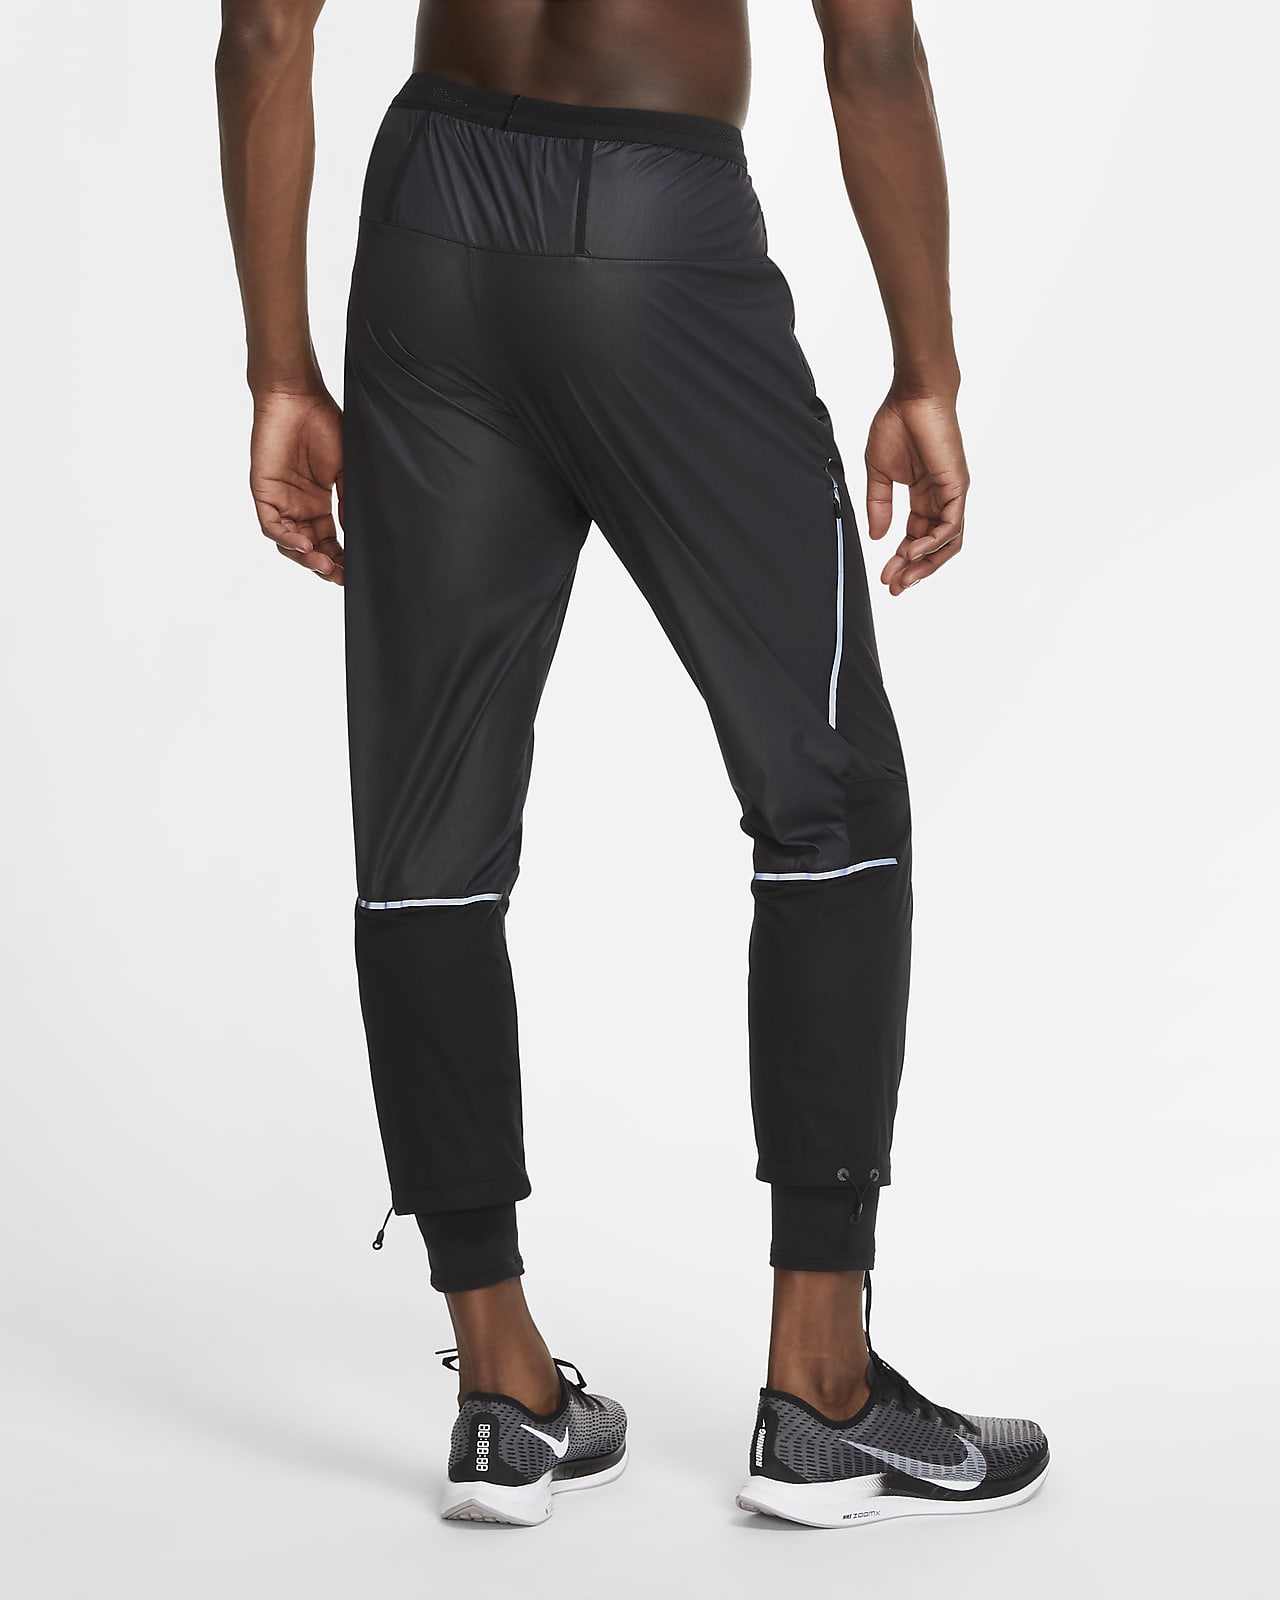 Nike Swift Shield Men's Running 